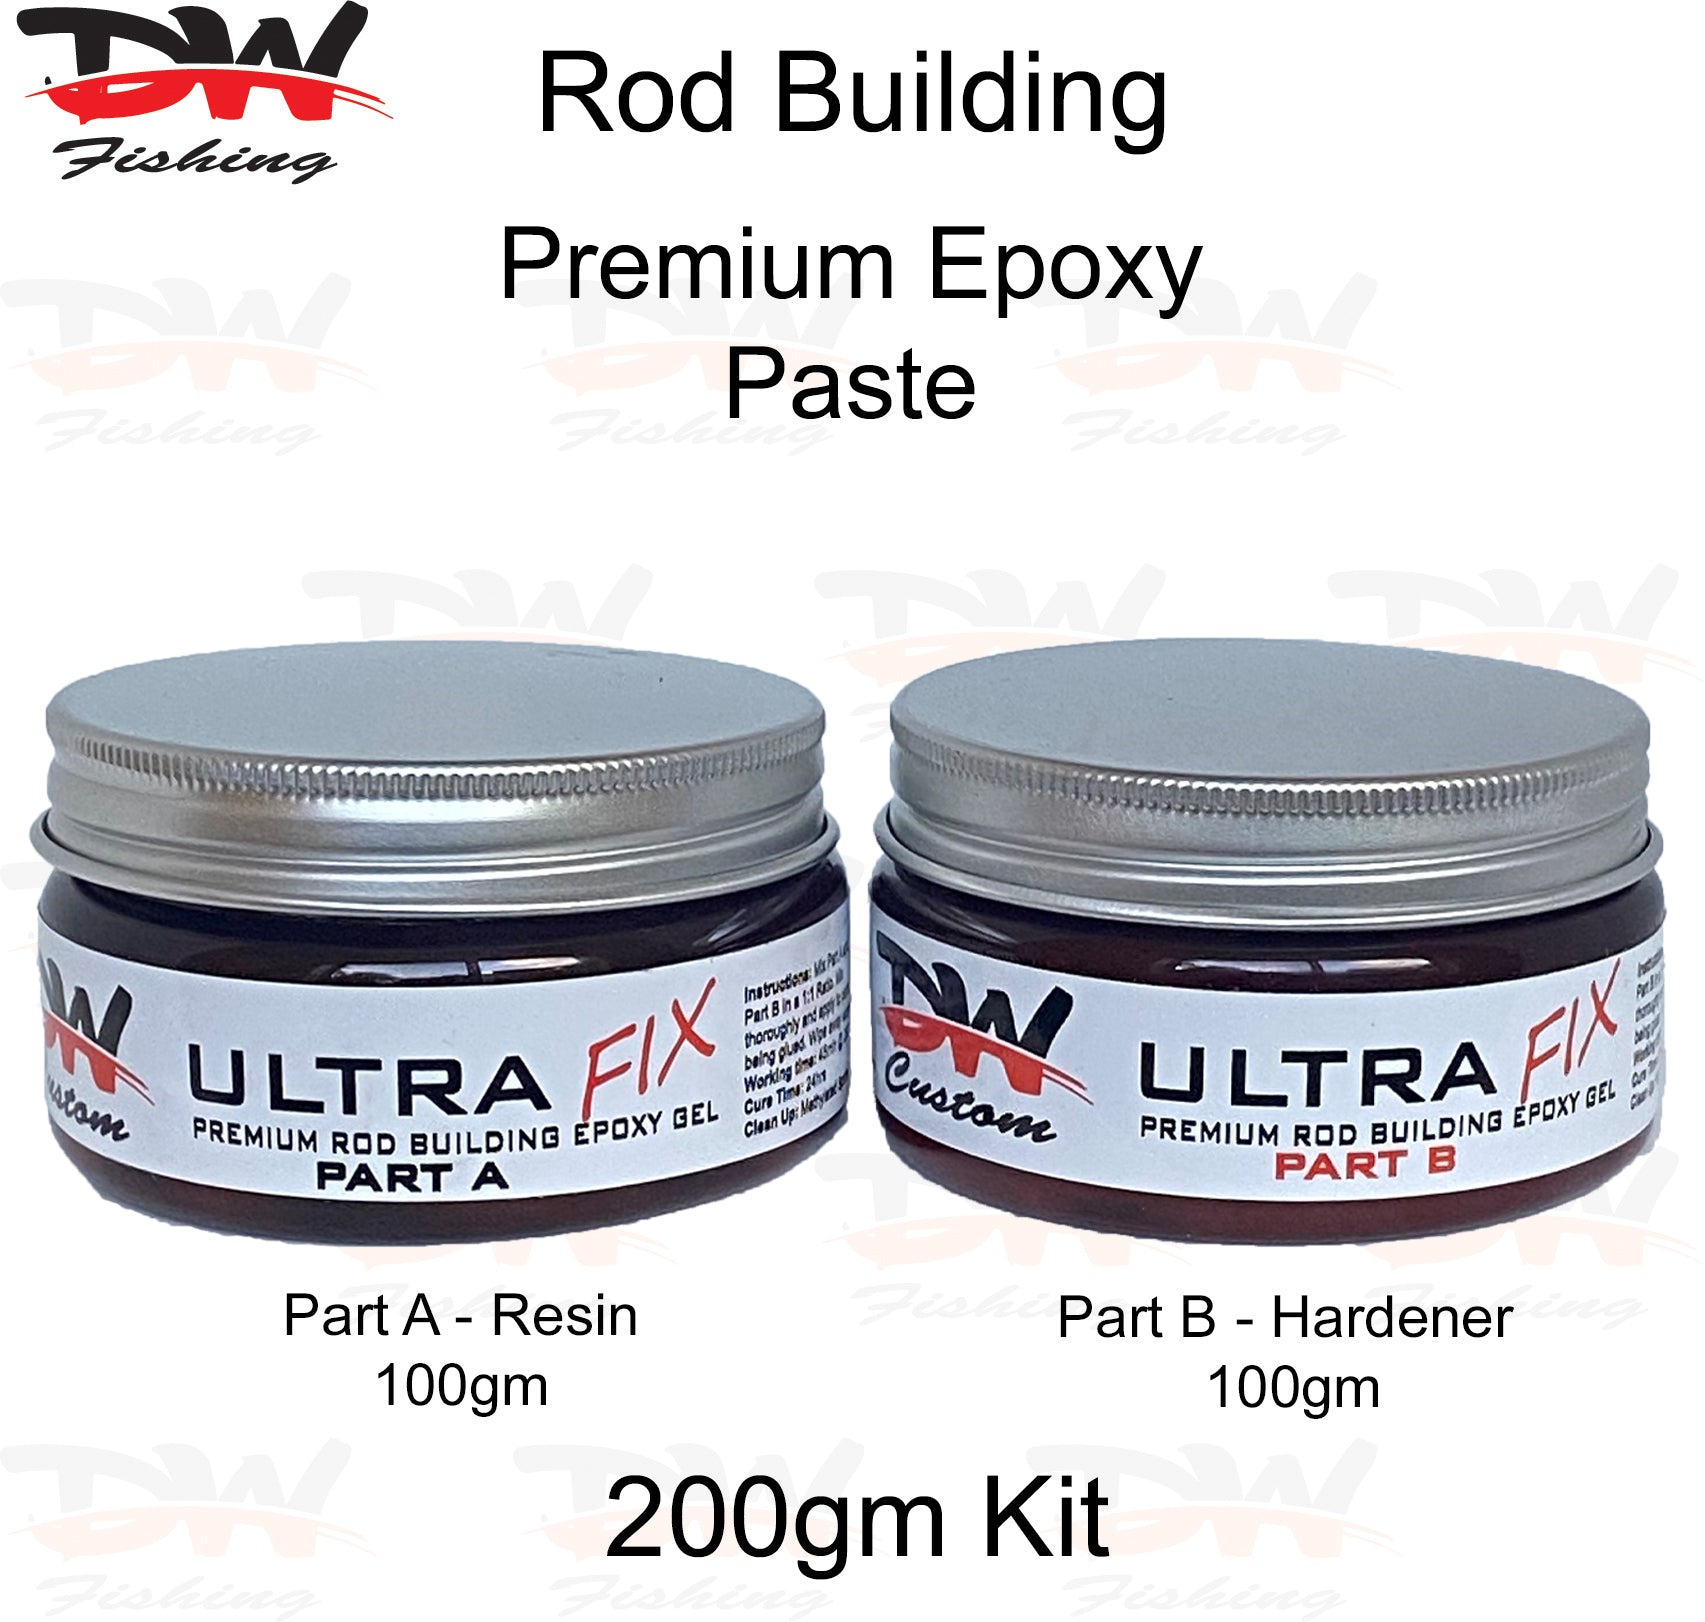 Ultra Fix premium rod building epoxy paste gel 200gm kit 2 part epoxy paste for fishing rod building